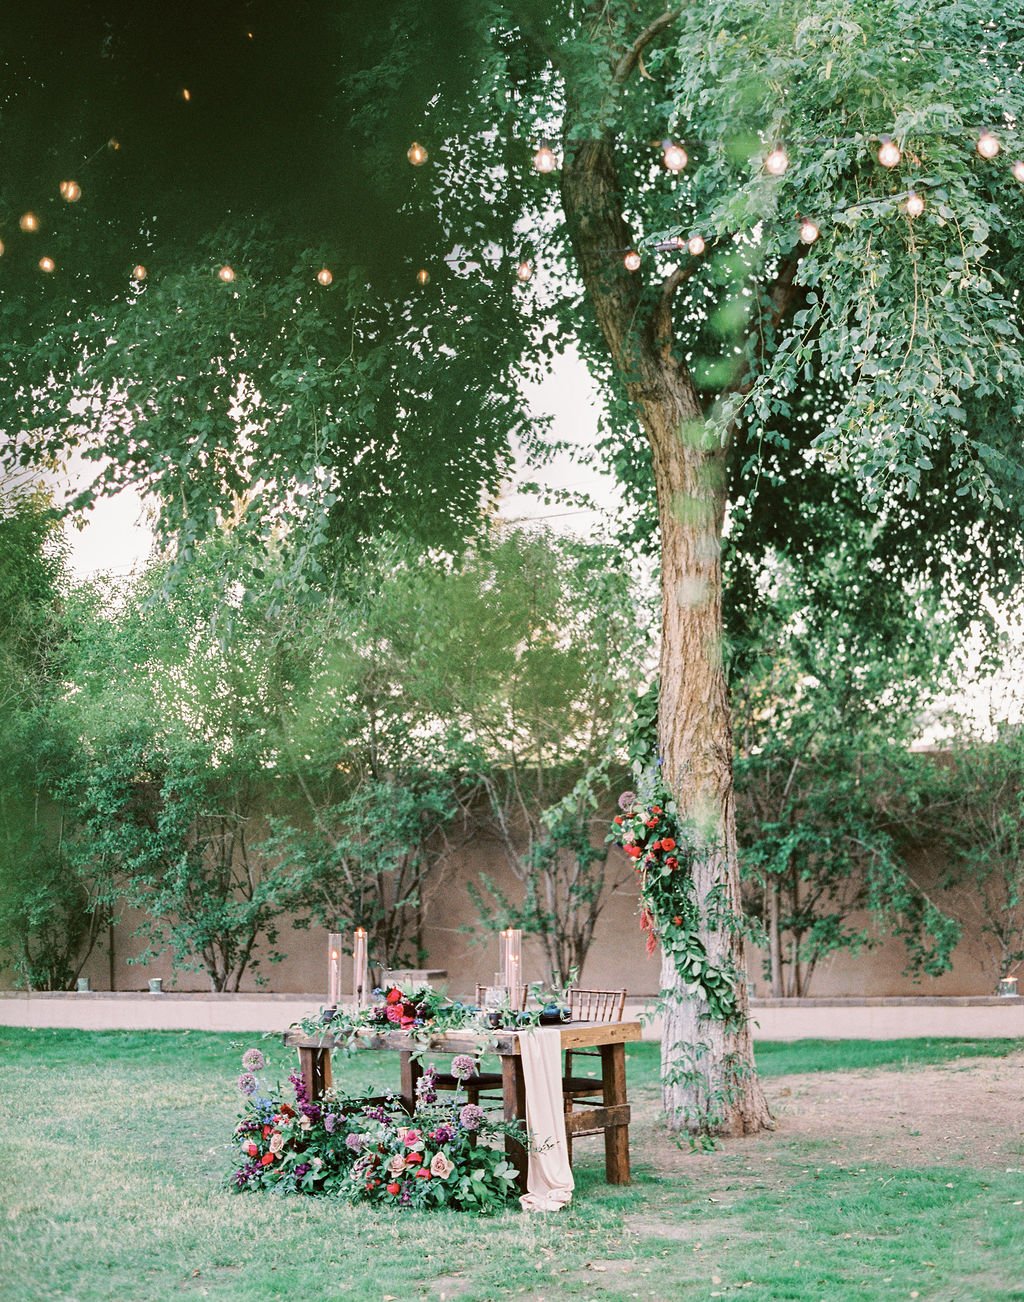 Dreamy Backyard Wedding with Moody Undertone - Konsider It Done - Arizona AZ Wedding Event Planner, Designer, Coordinator in Scottsdale, Phoenix, Paradise Valley,  Tucson, Sedona, Destination, California, Lake Tahoe 15.jpg